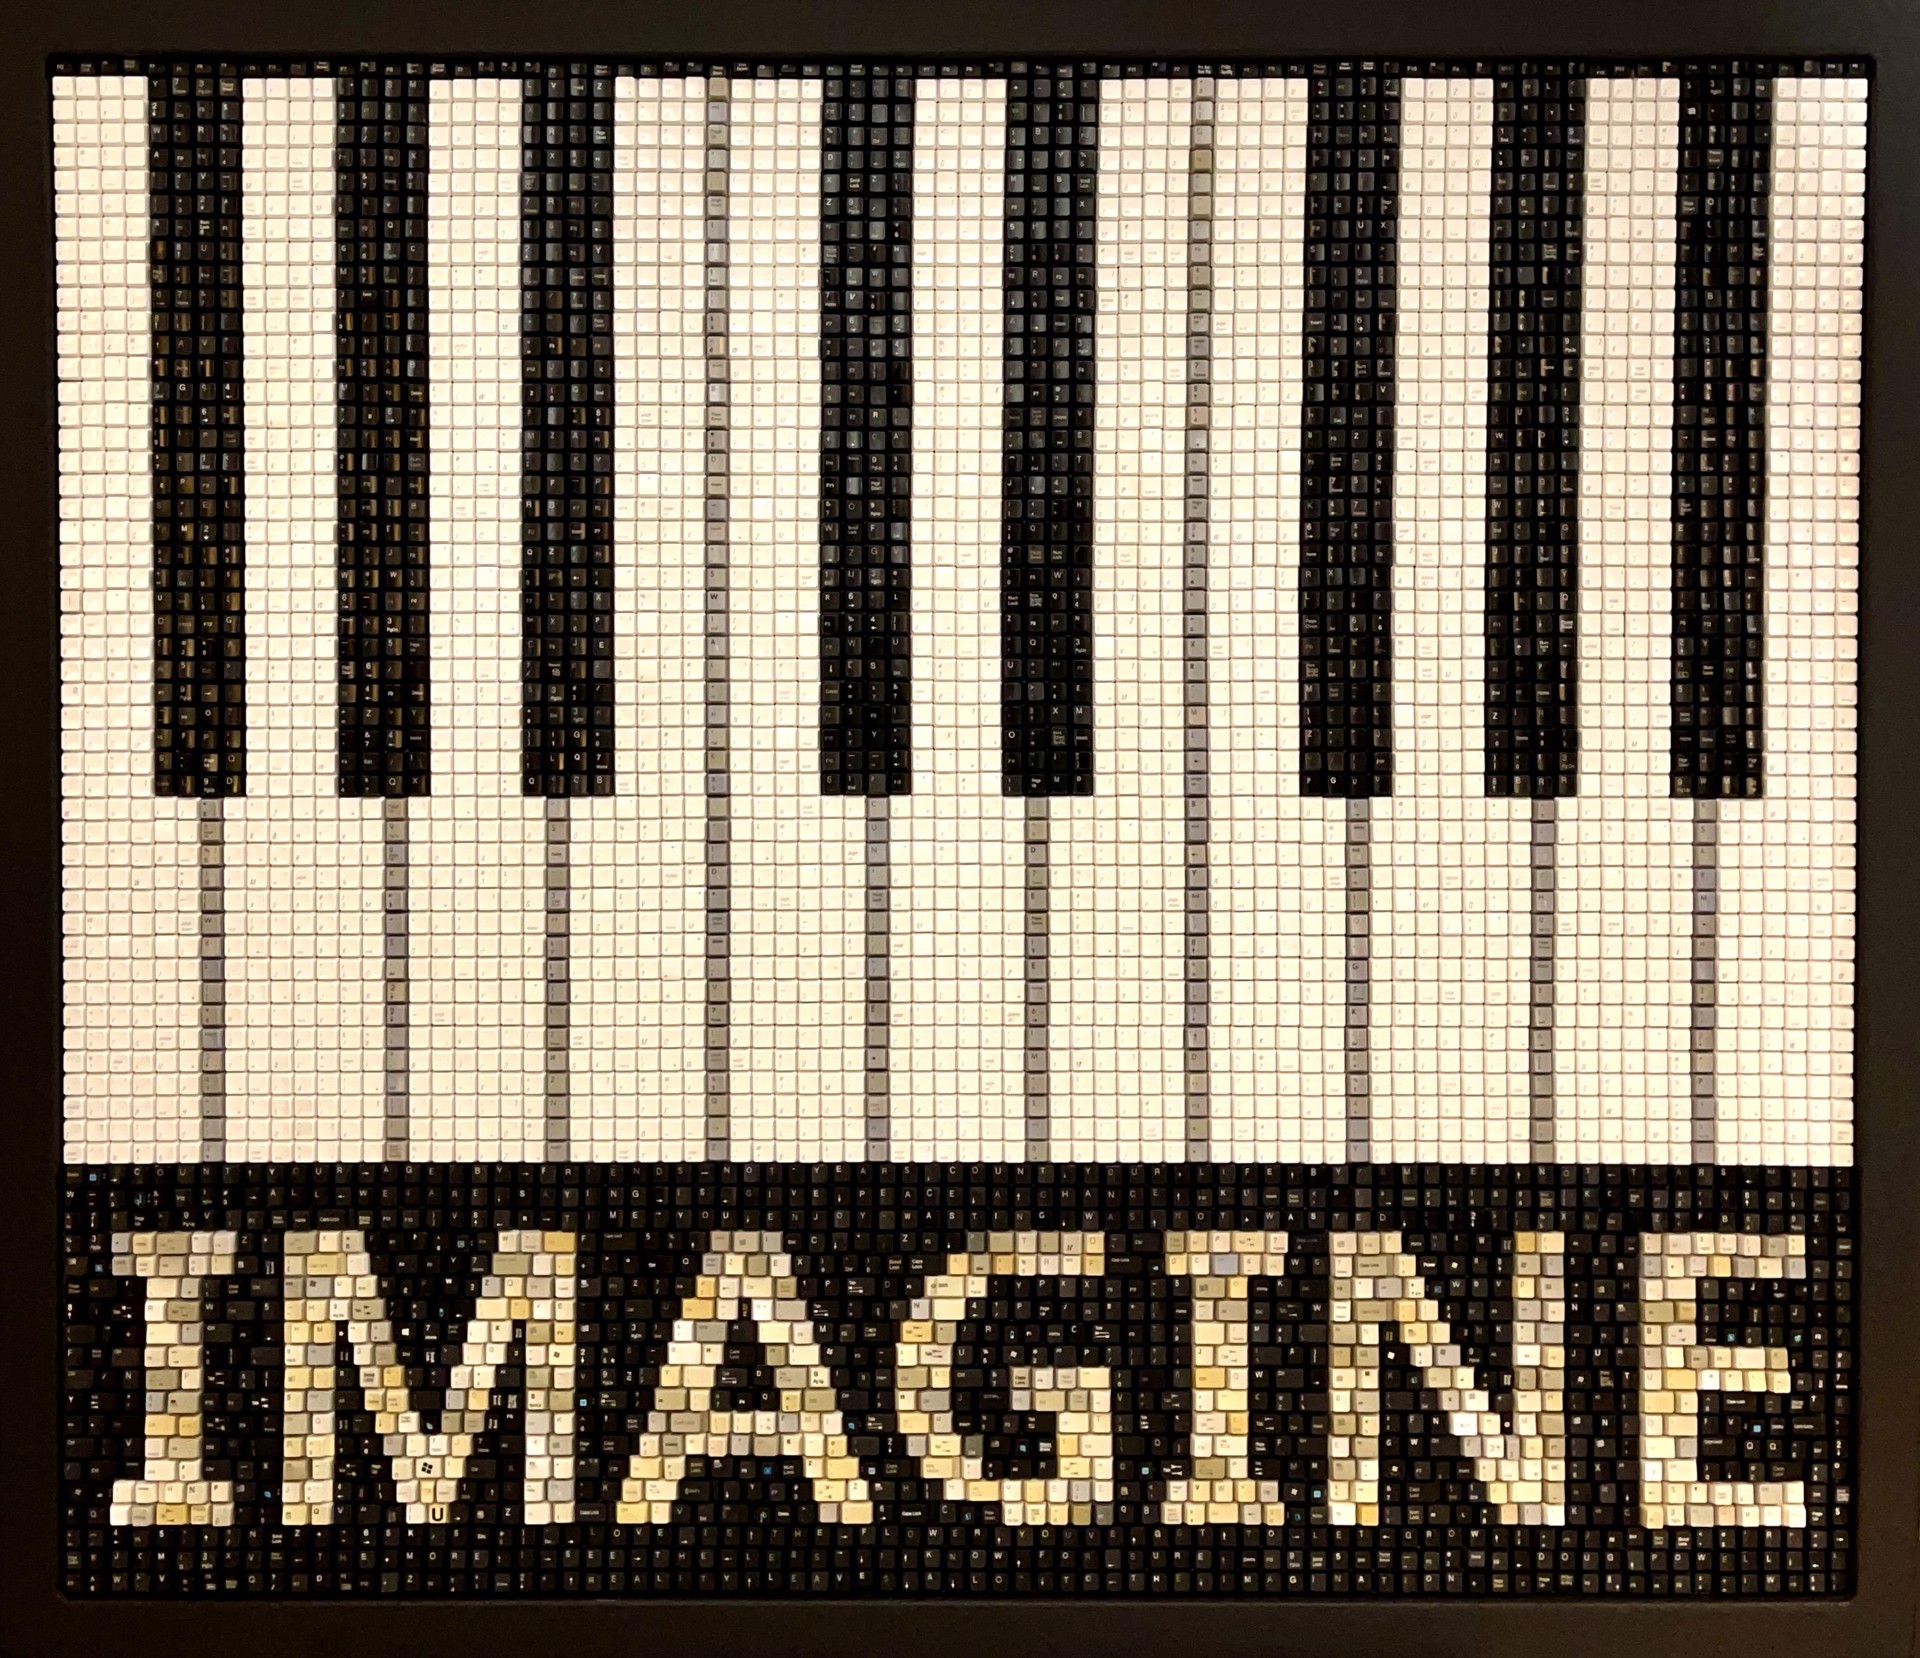 Piano Keys Imagine by Doug Powell